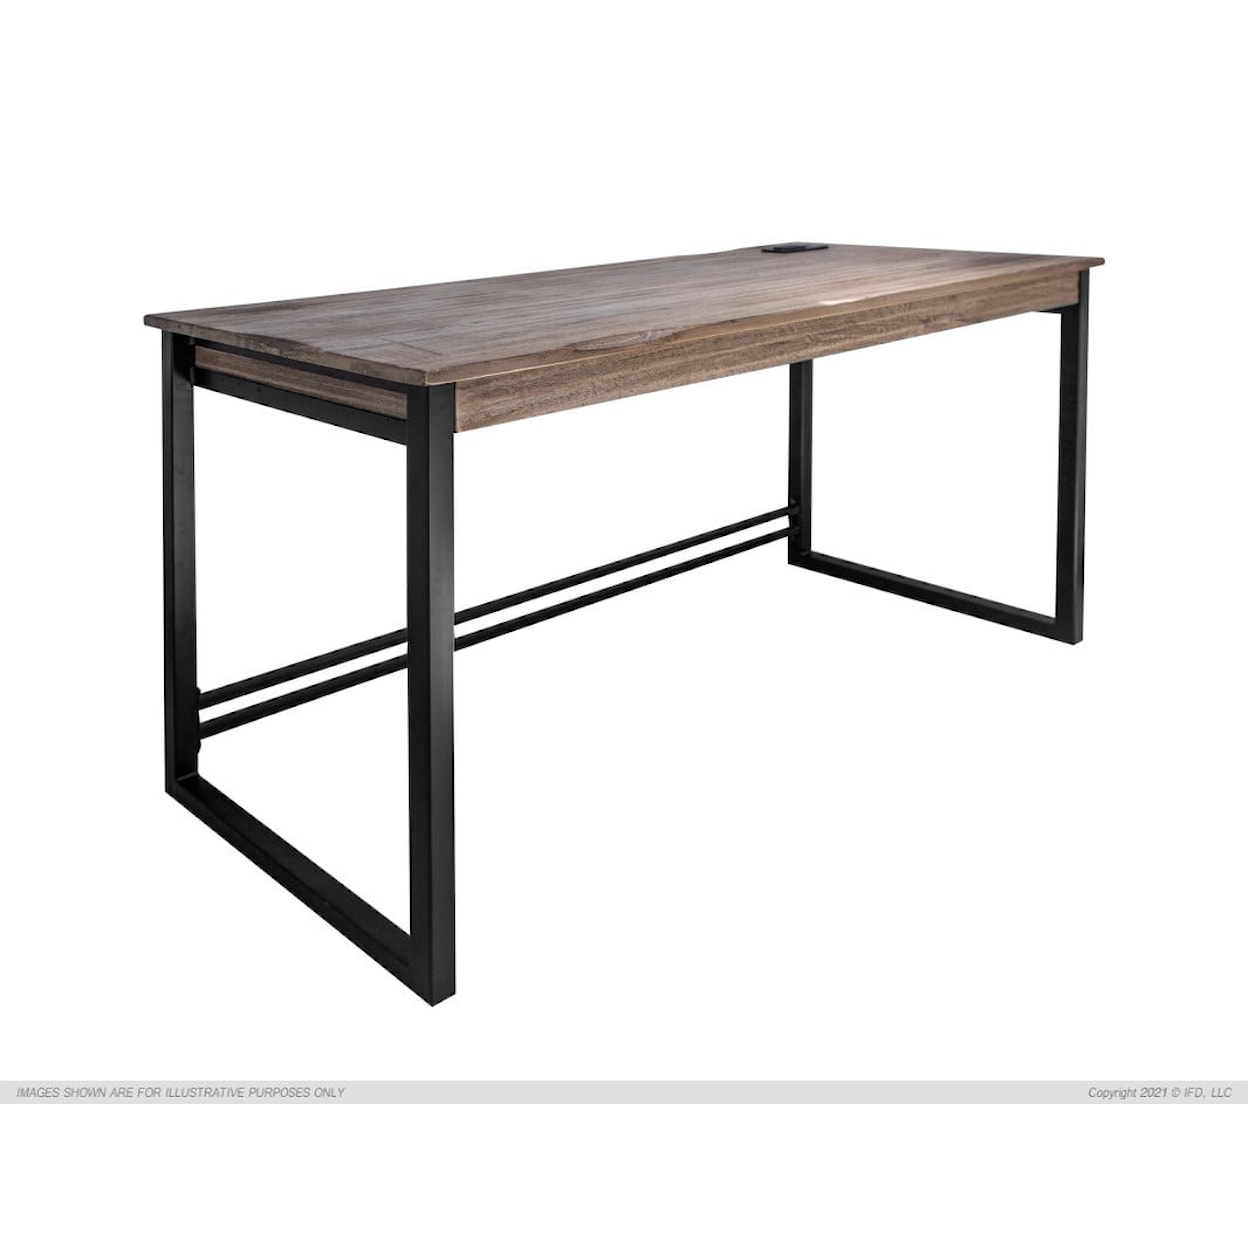 IFD International Furniture Direct Blacksmith Table Desk with Metal Base and USB Port